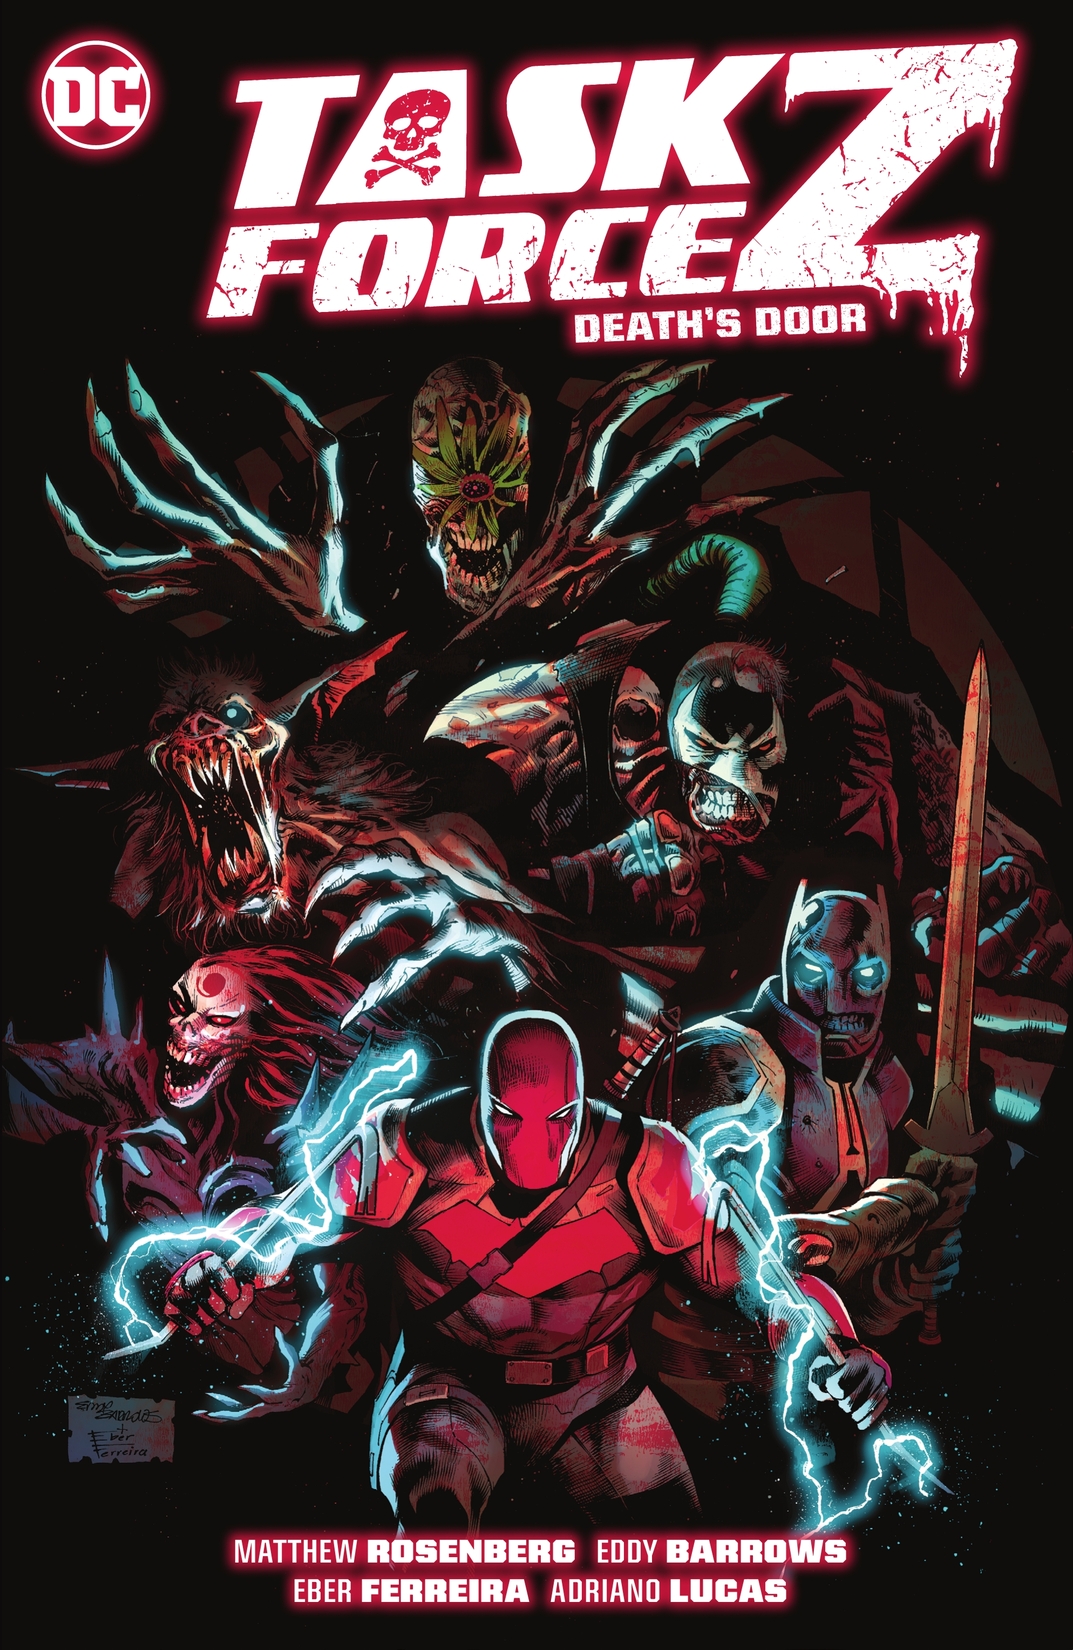 Task Force Z Vol. 1: Death's Door preview images